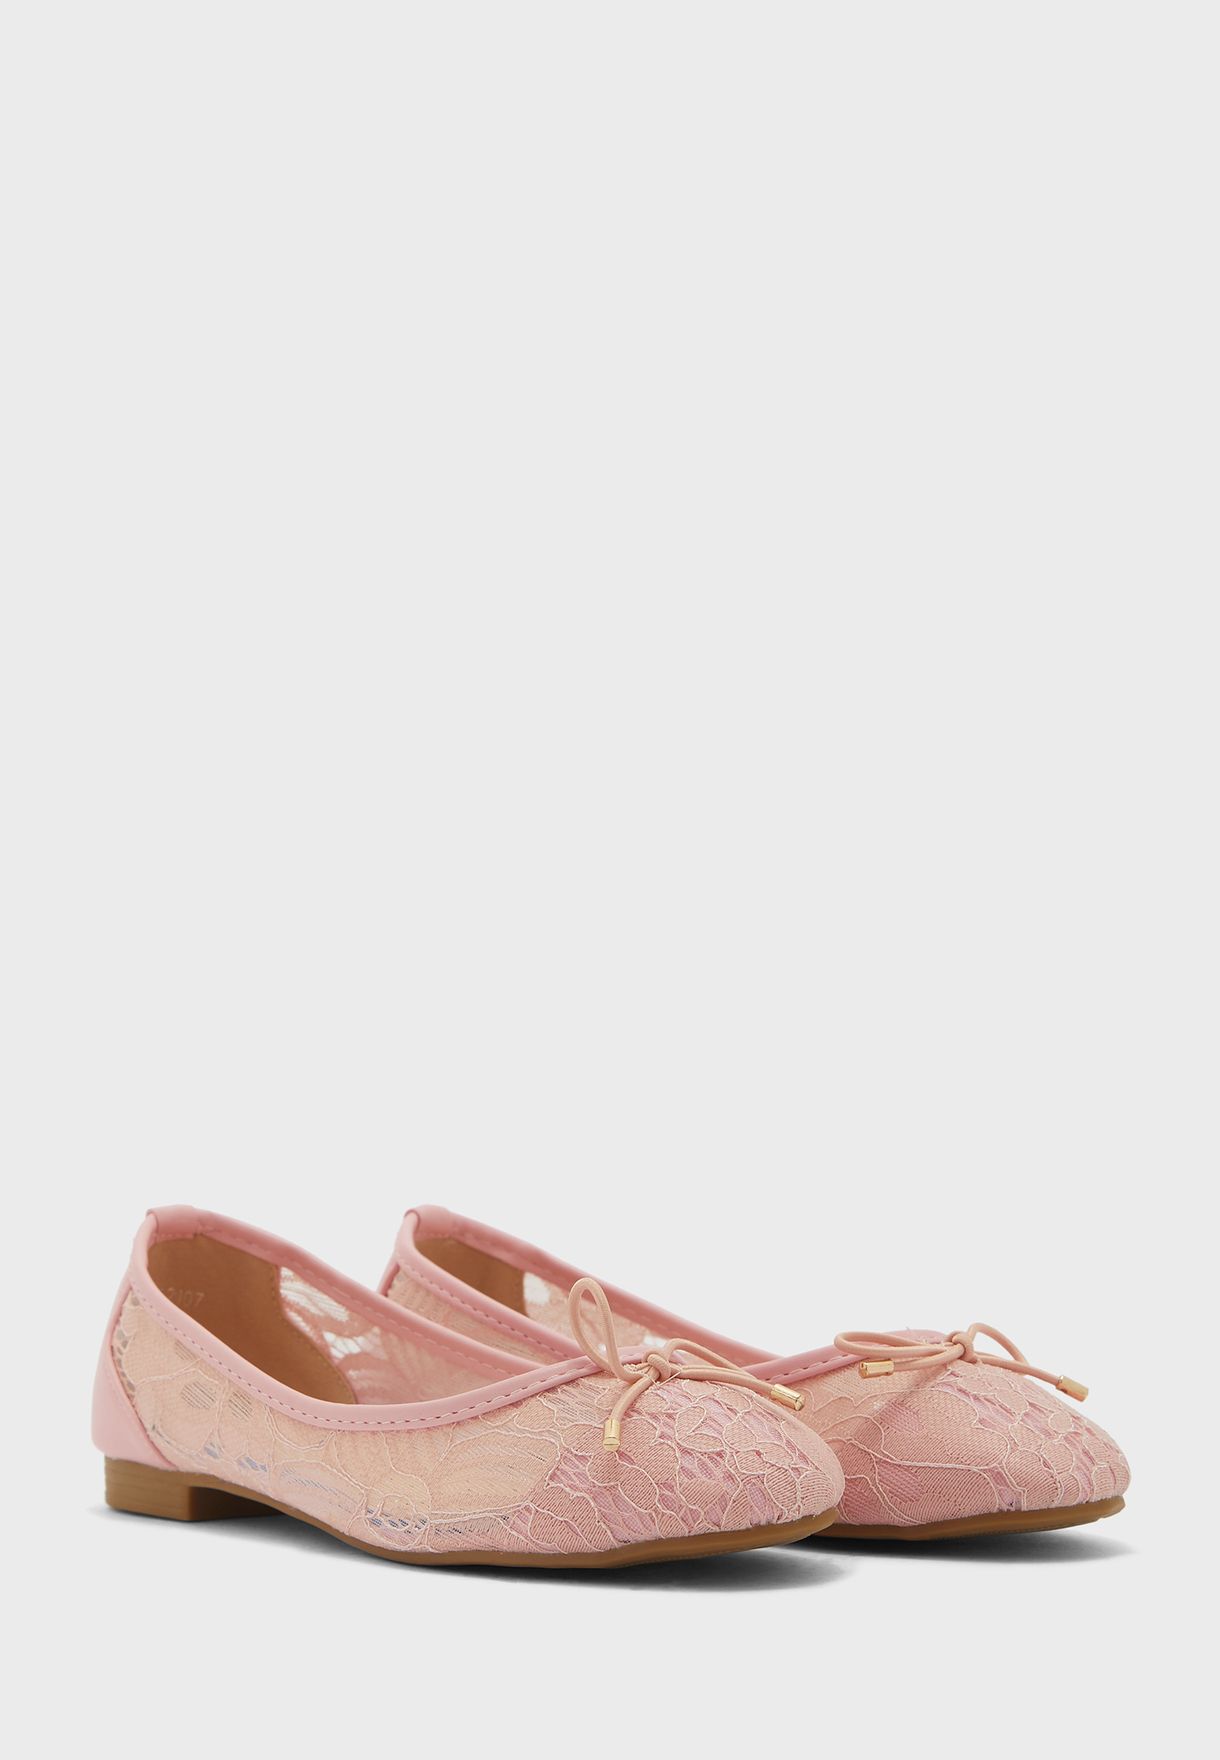 Lace Ballet Flat Shoe Pink 